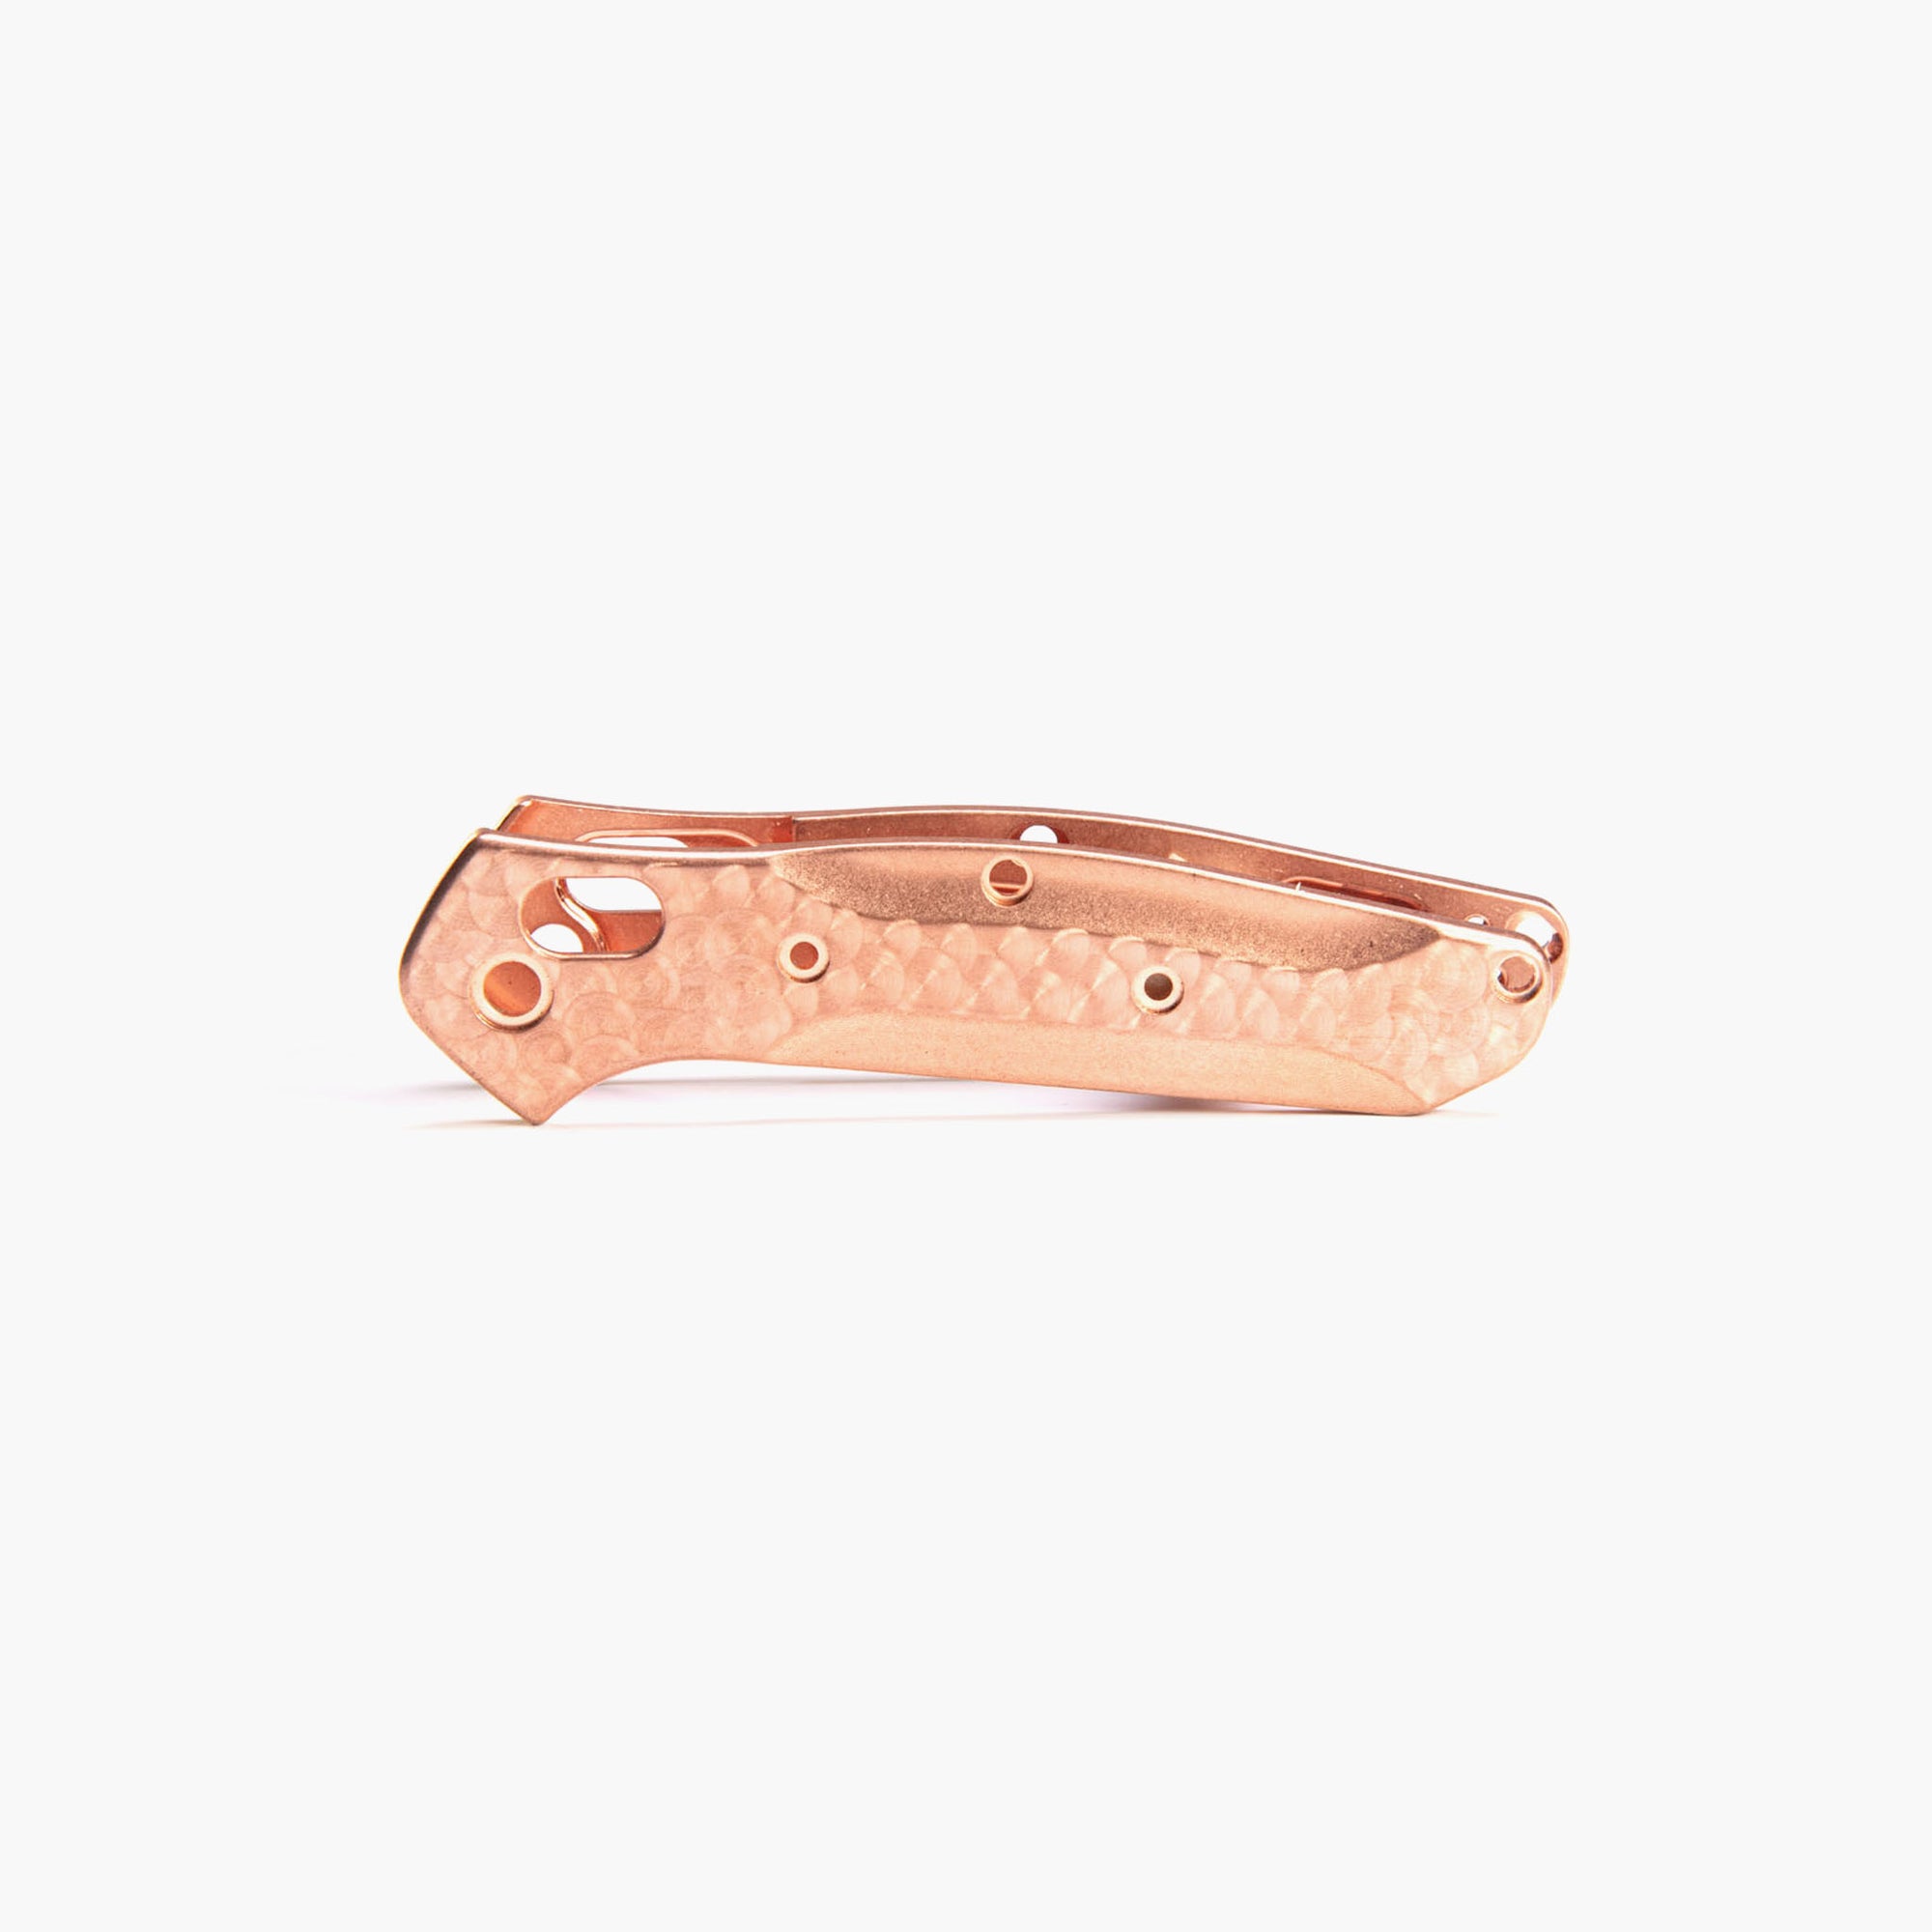 LTD Jeweled Copper Scales for Benchmade Mini Osborne 945